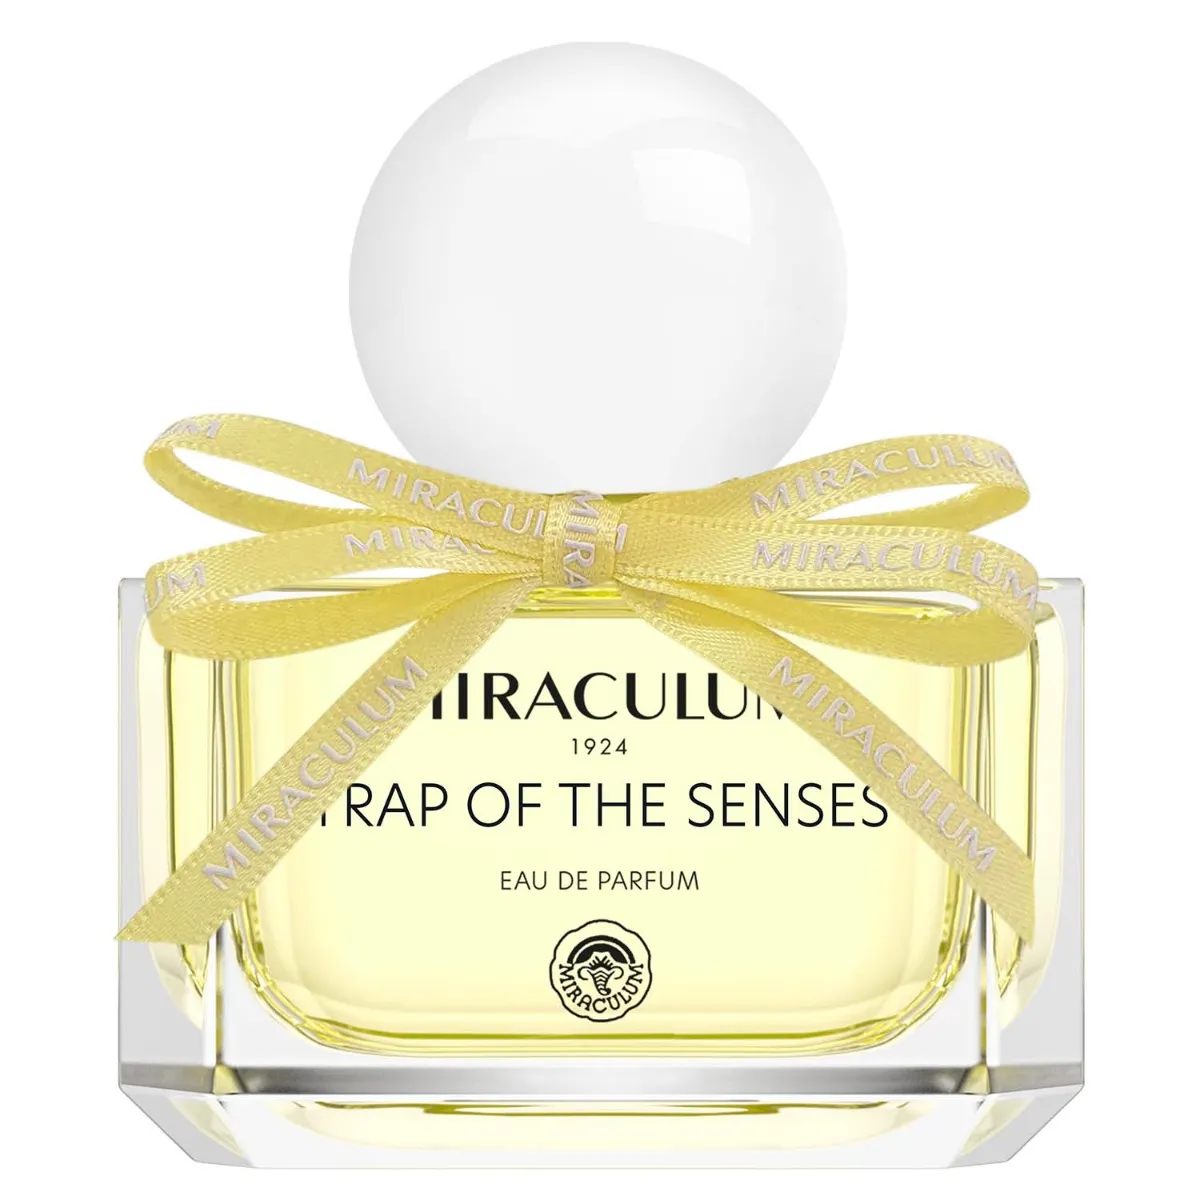 Miraculum Trap of the senses woda perfumowana dla kobiet, 50 ml 